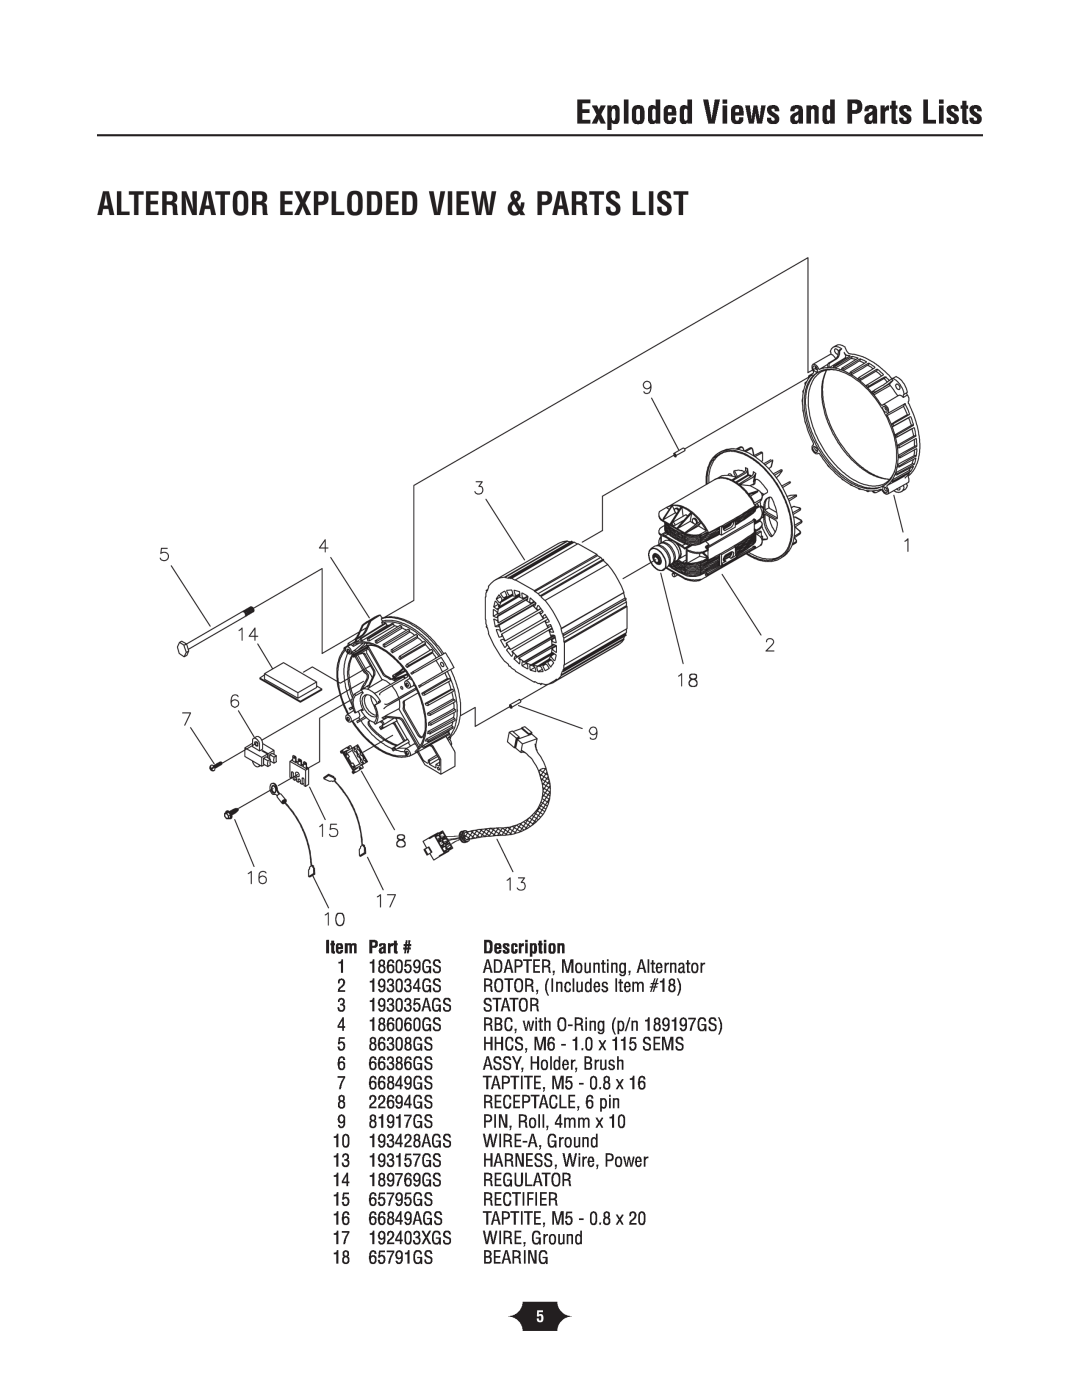 Briggs & Stratton 30342 manual Alternator Exploded View & Parts List, Exploded Views and Parts Lists 